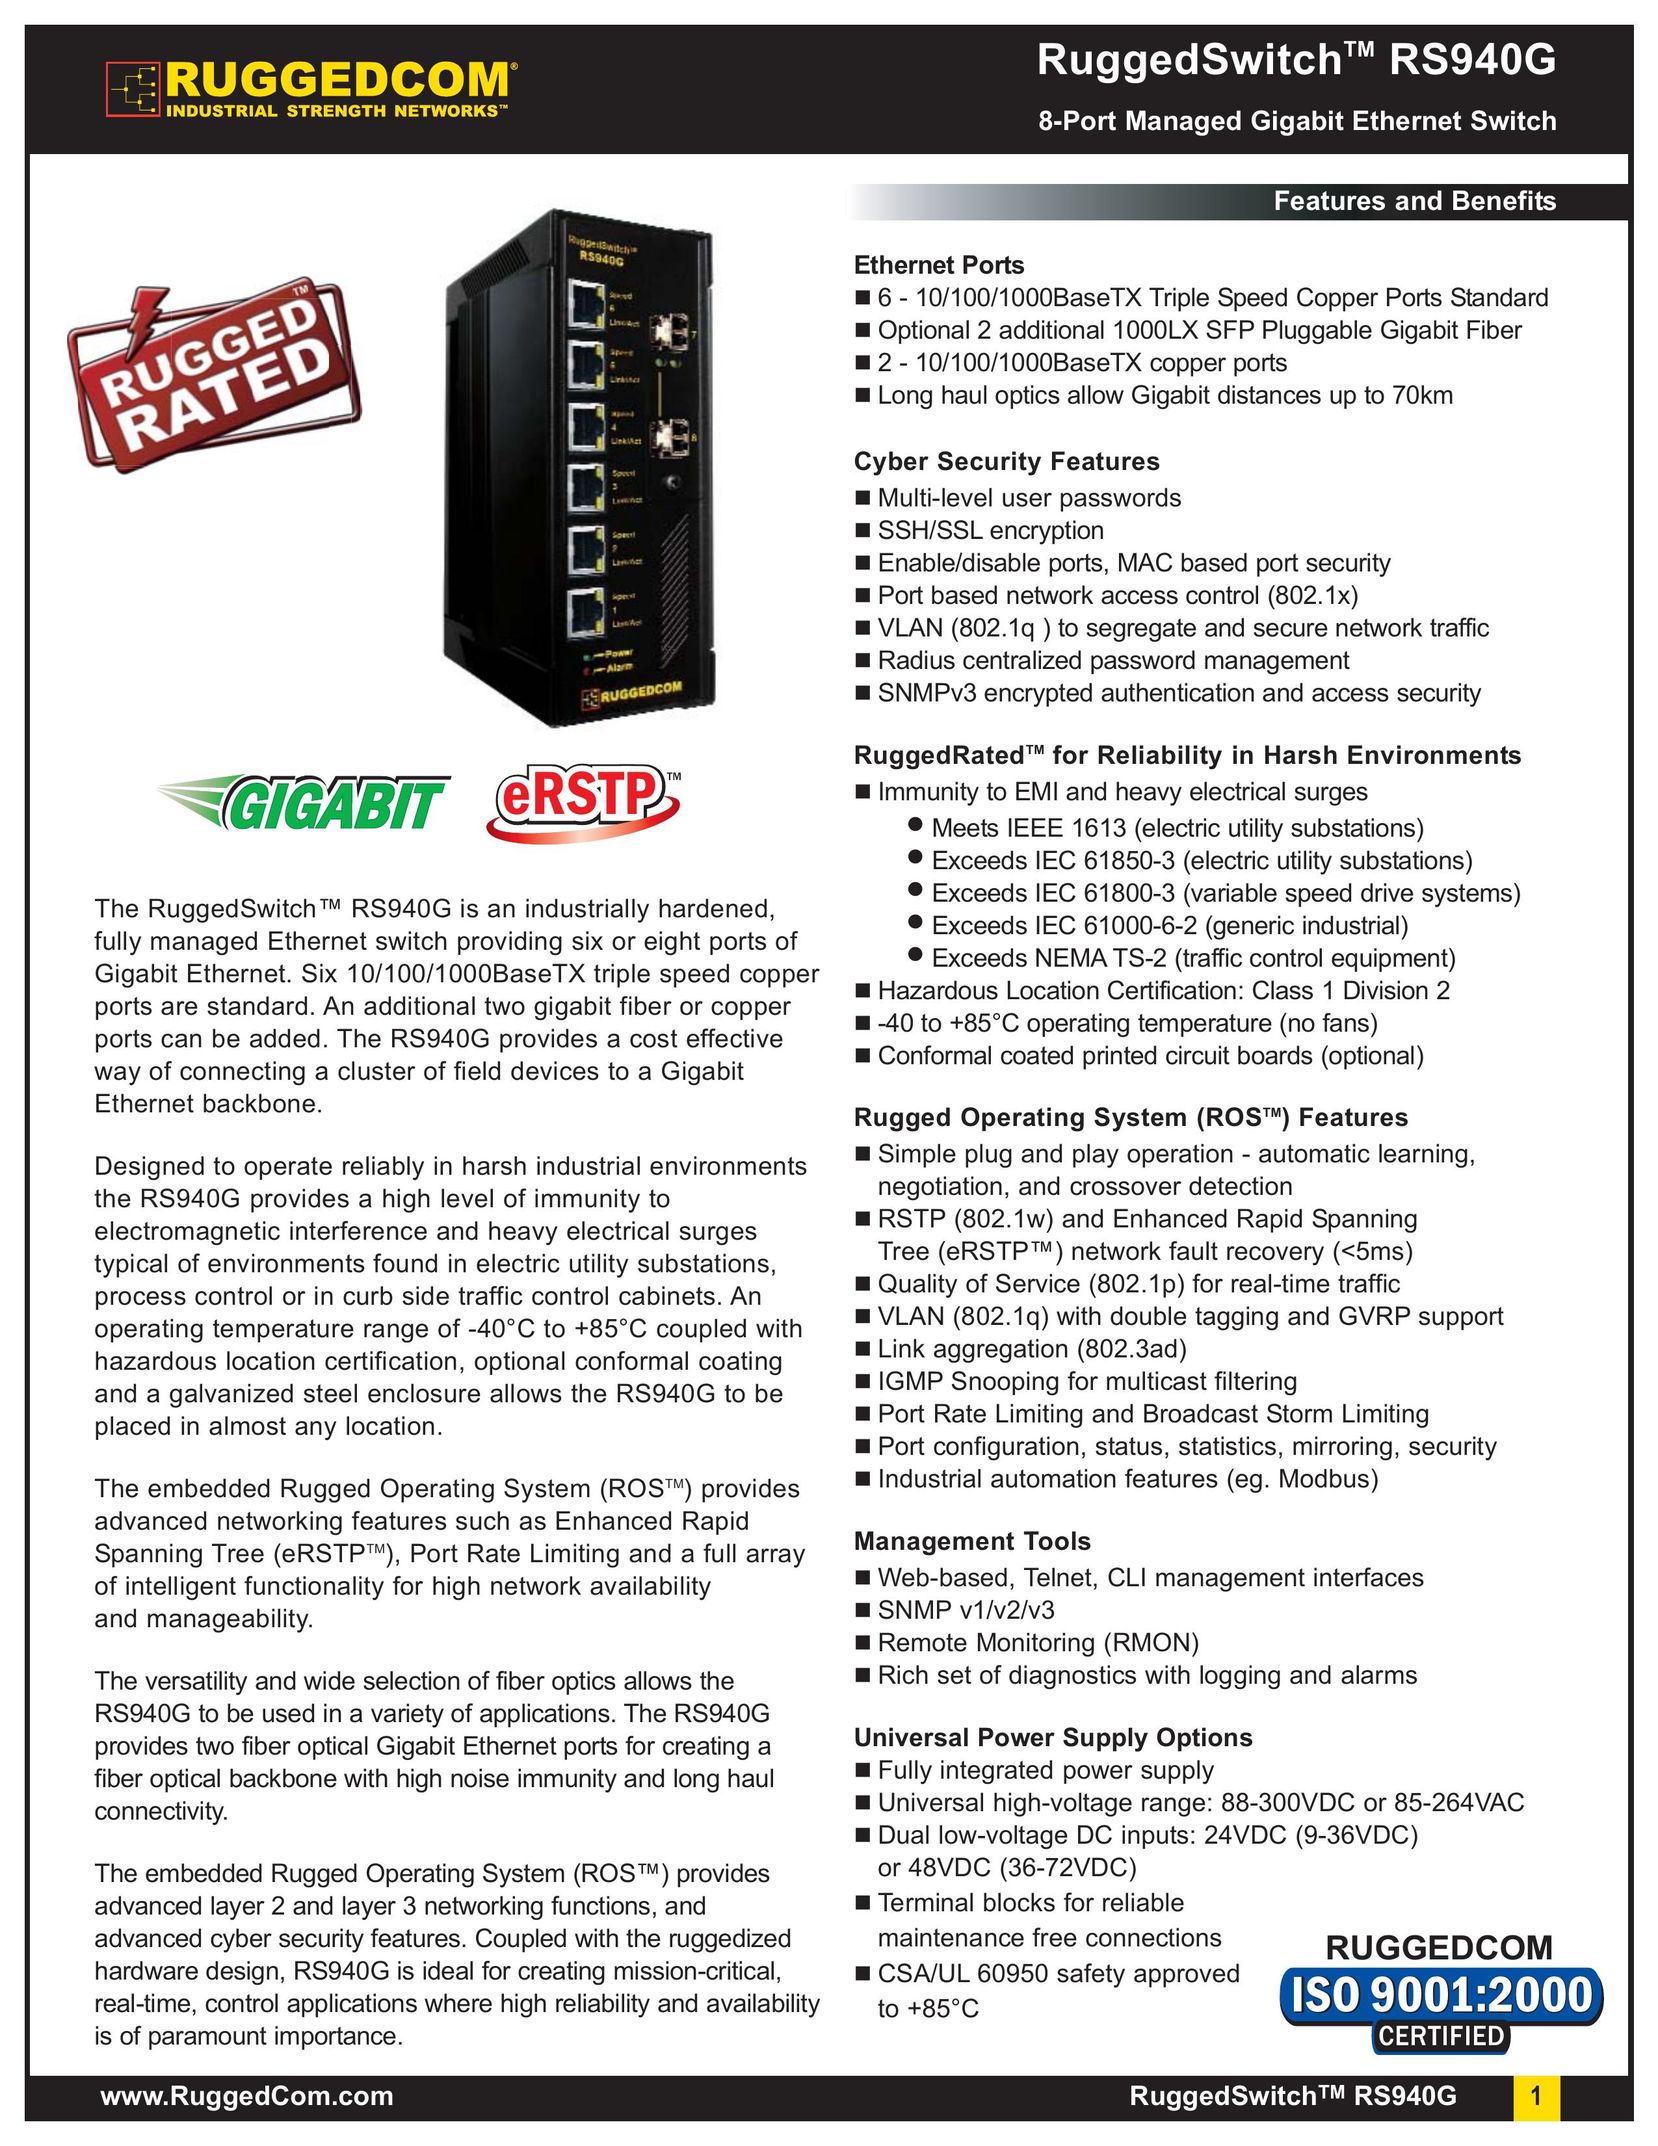 RuggedCom RS940G Switch User Manual